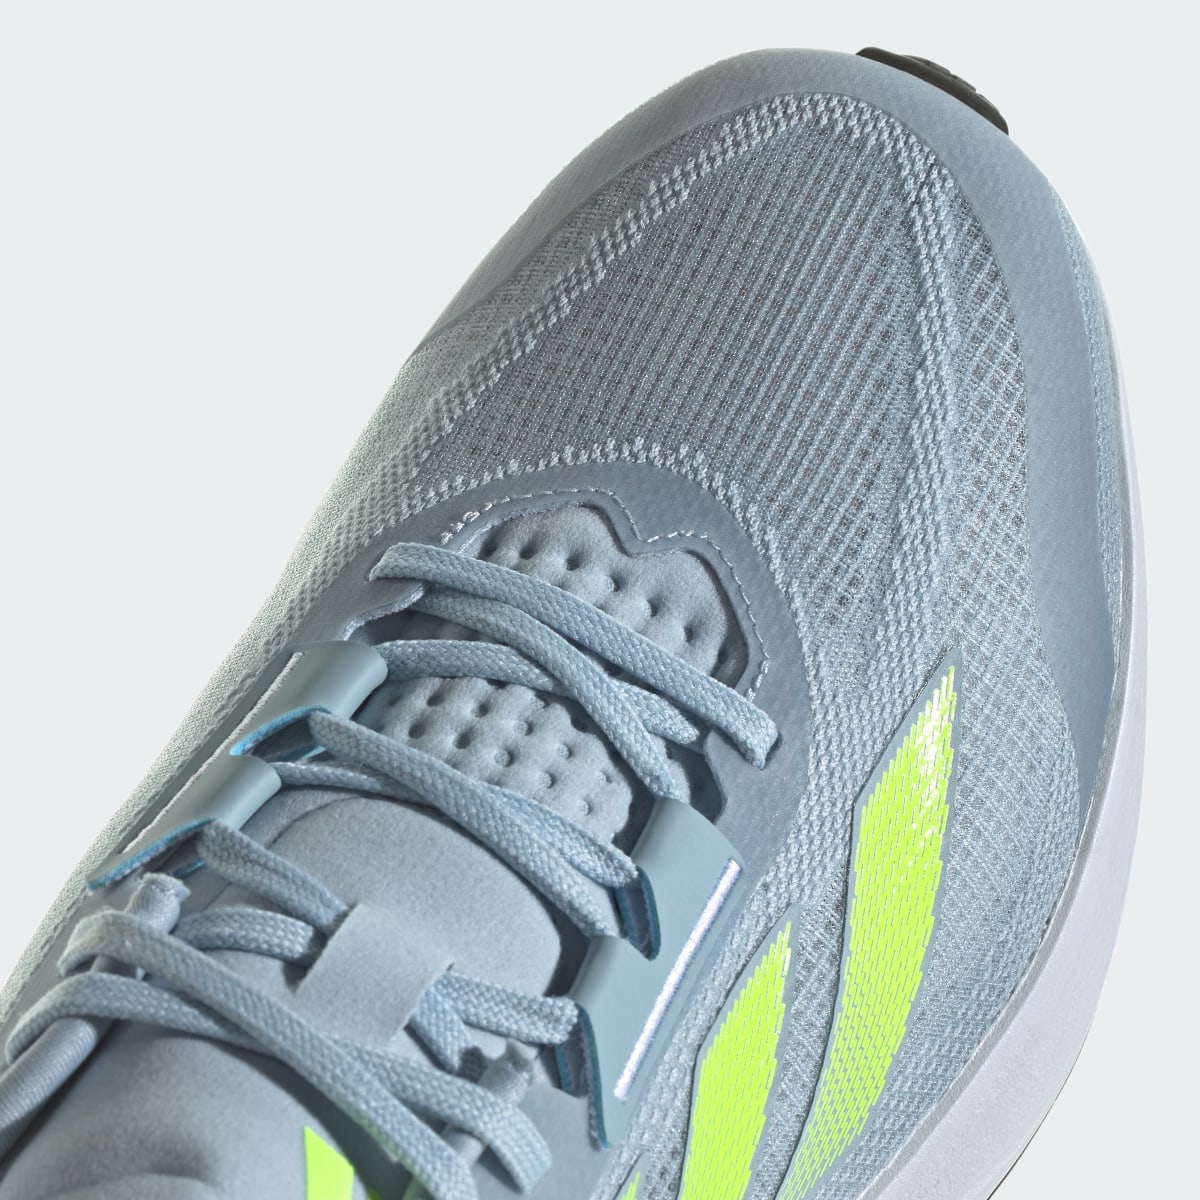 Adidas Duramo Speed Running Shoes. 10